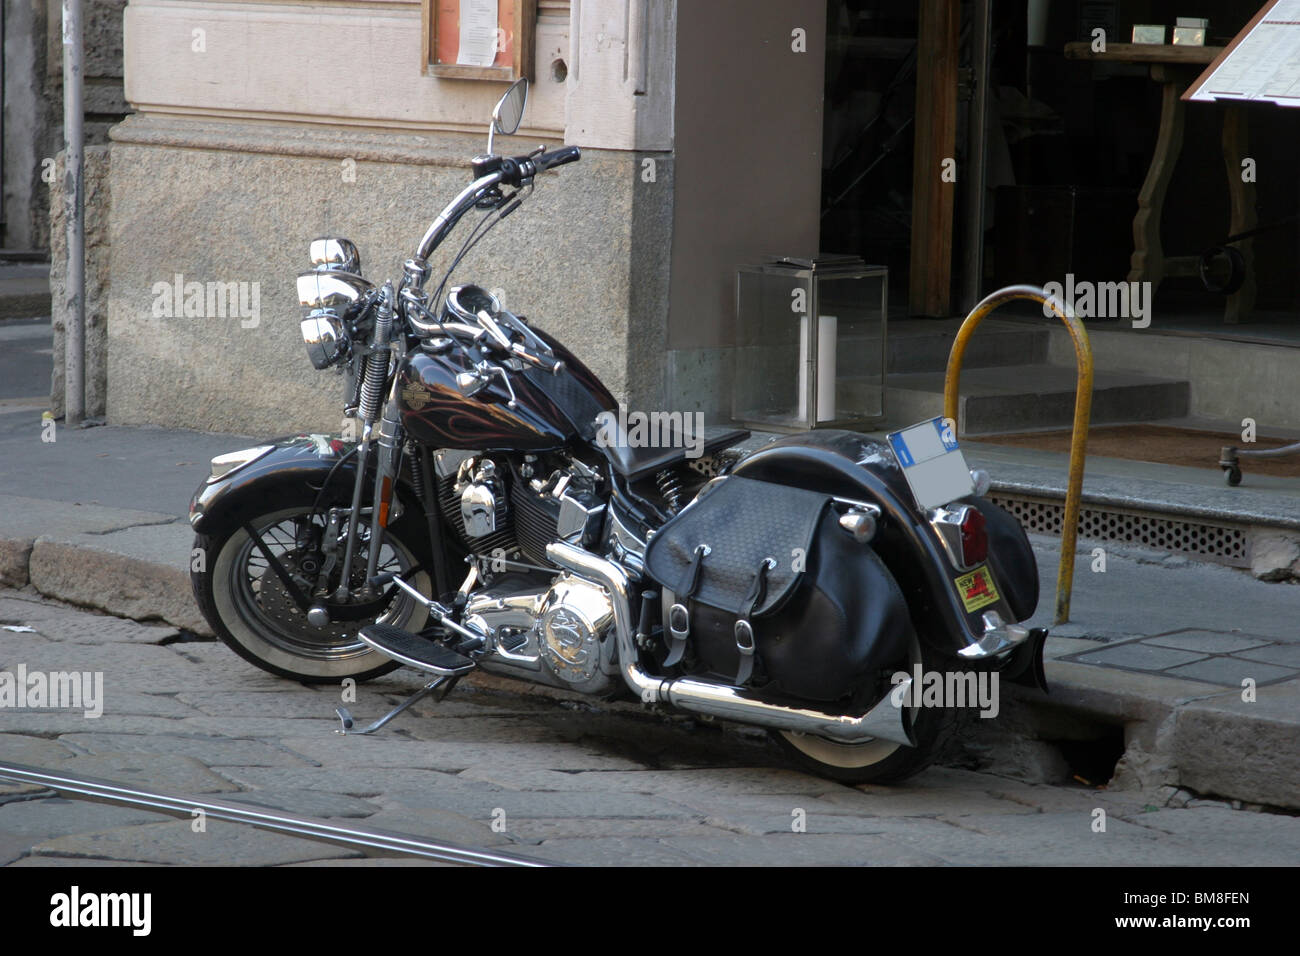 Moto d'epoca Harley Davidson Foto stock - Alamy